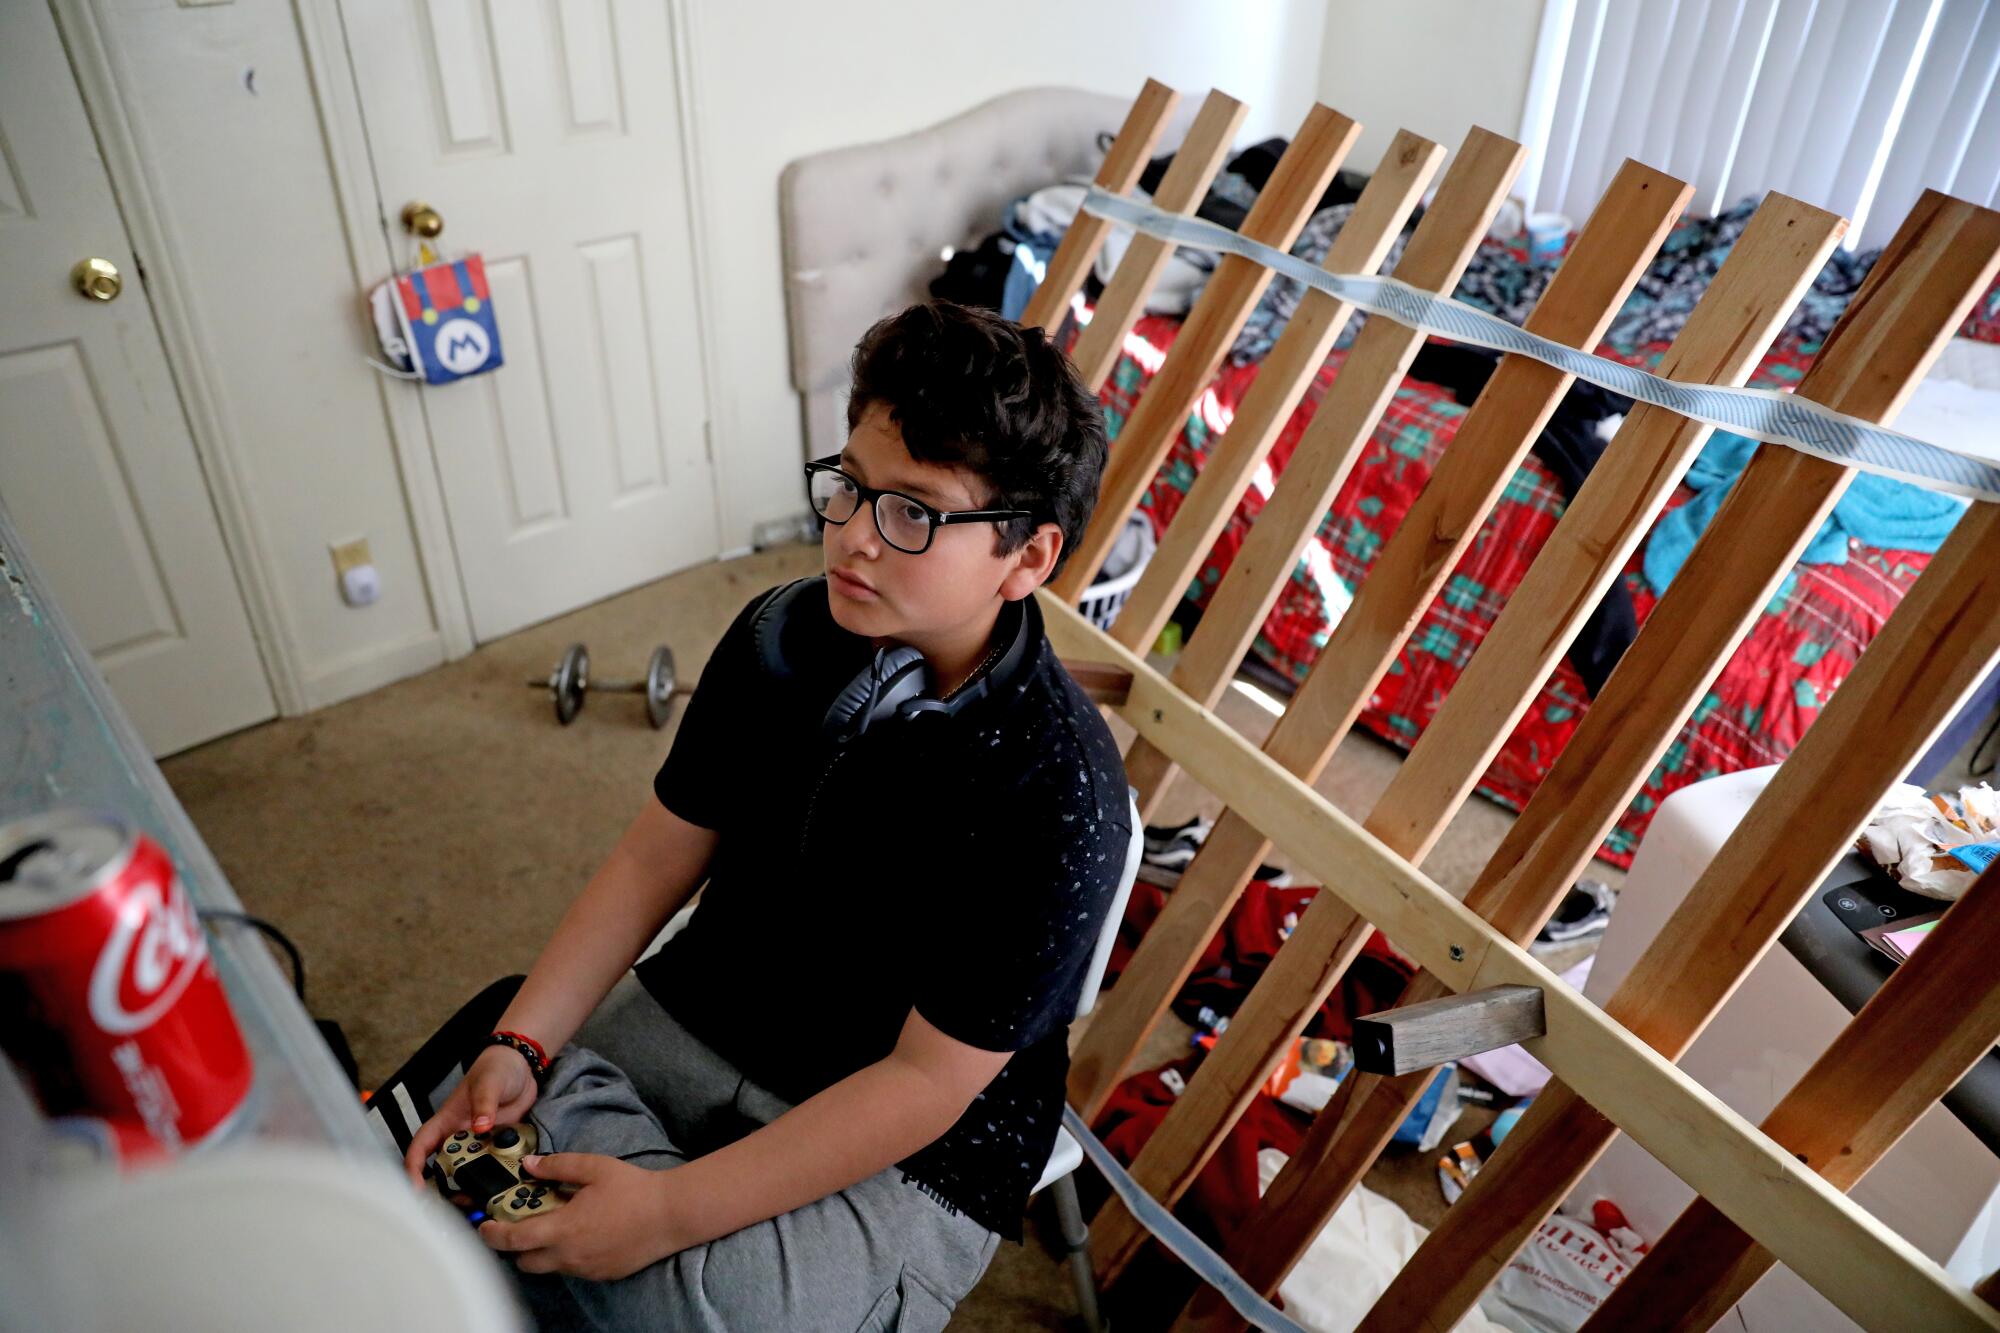 Jacob Gordillo, 11, plays video games in his room.